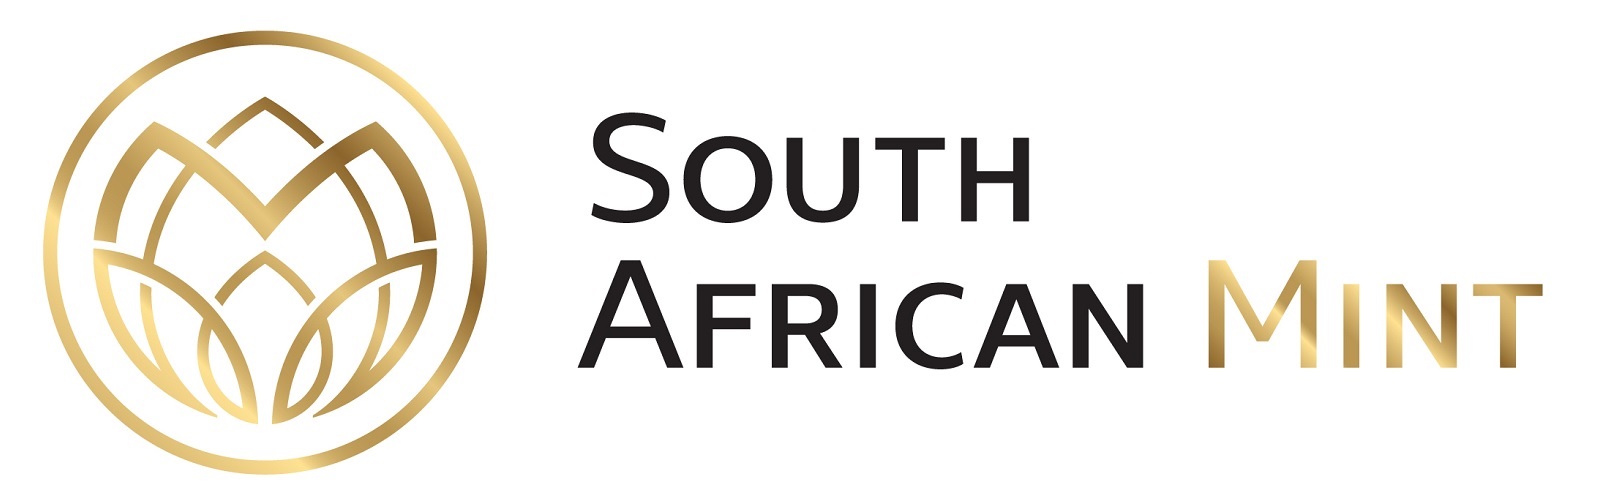 South African Mint (shop illustration) (zoom)